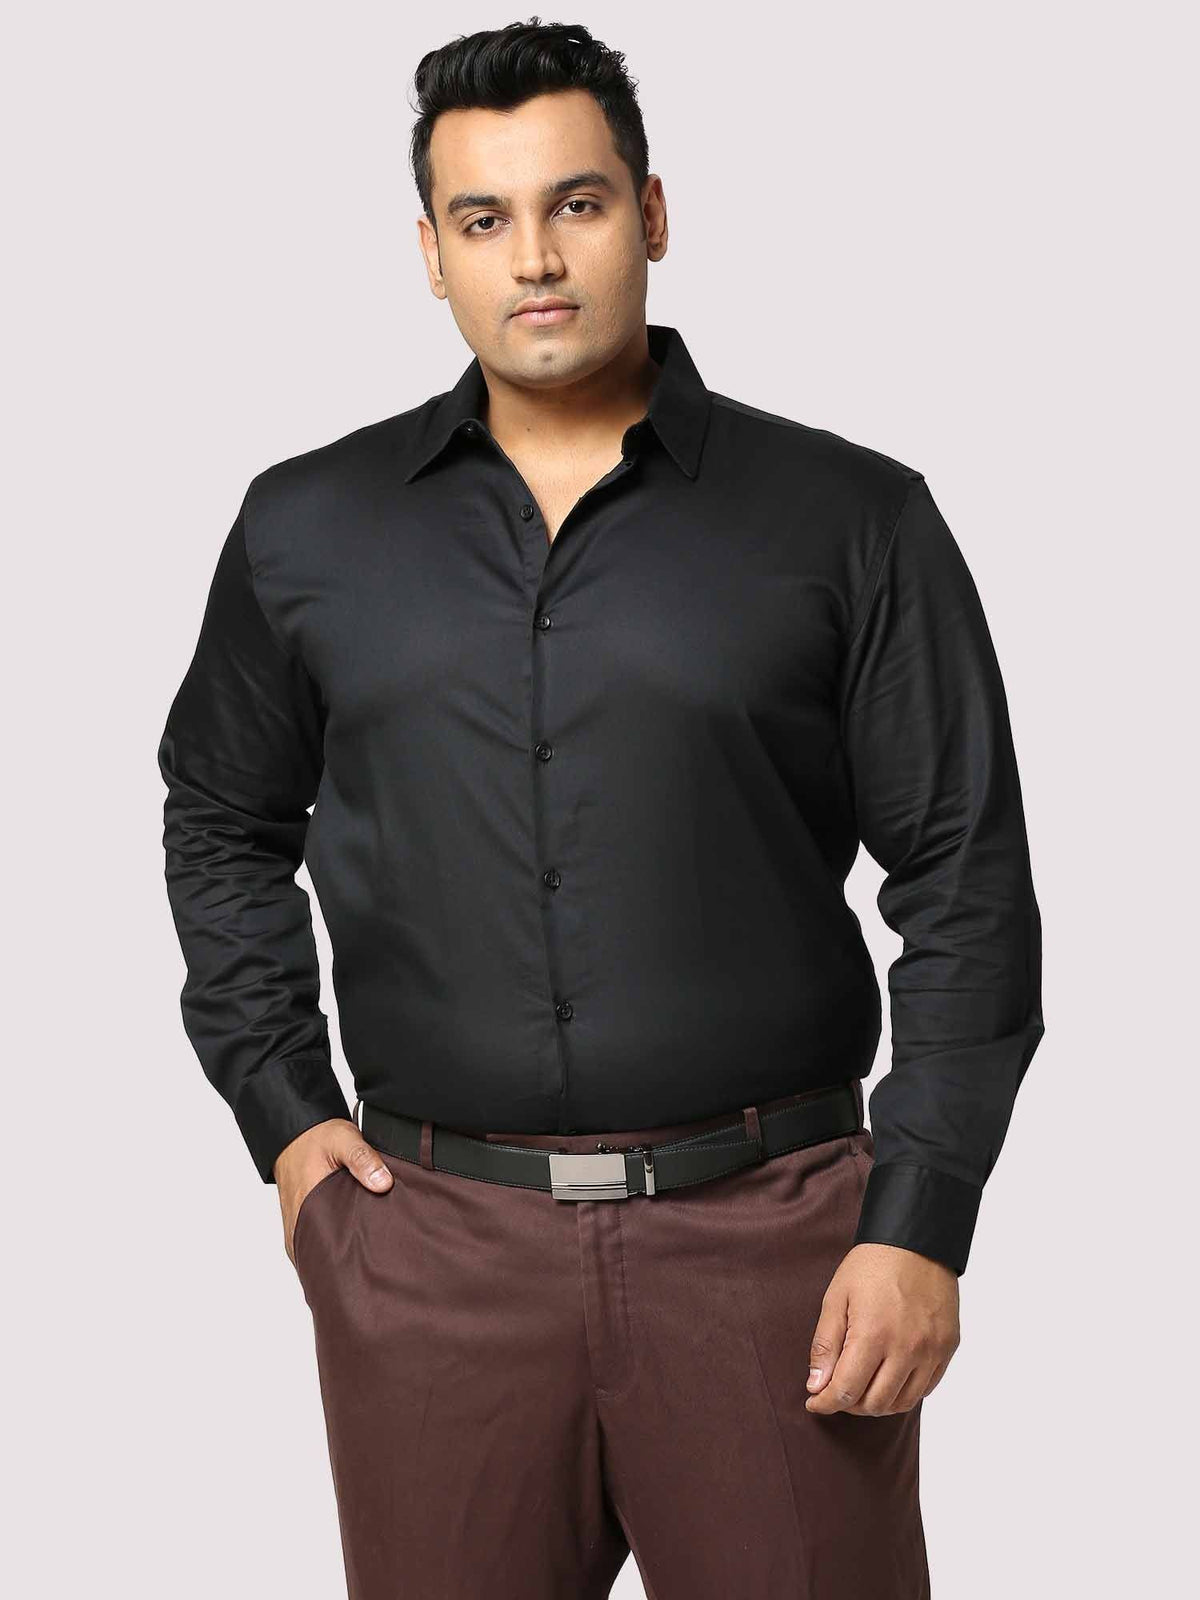 Black Solid Stretchable Cotton Shirt Men's Plus Size - Guniaa Fashions